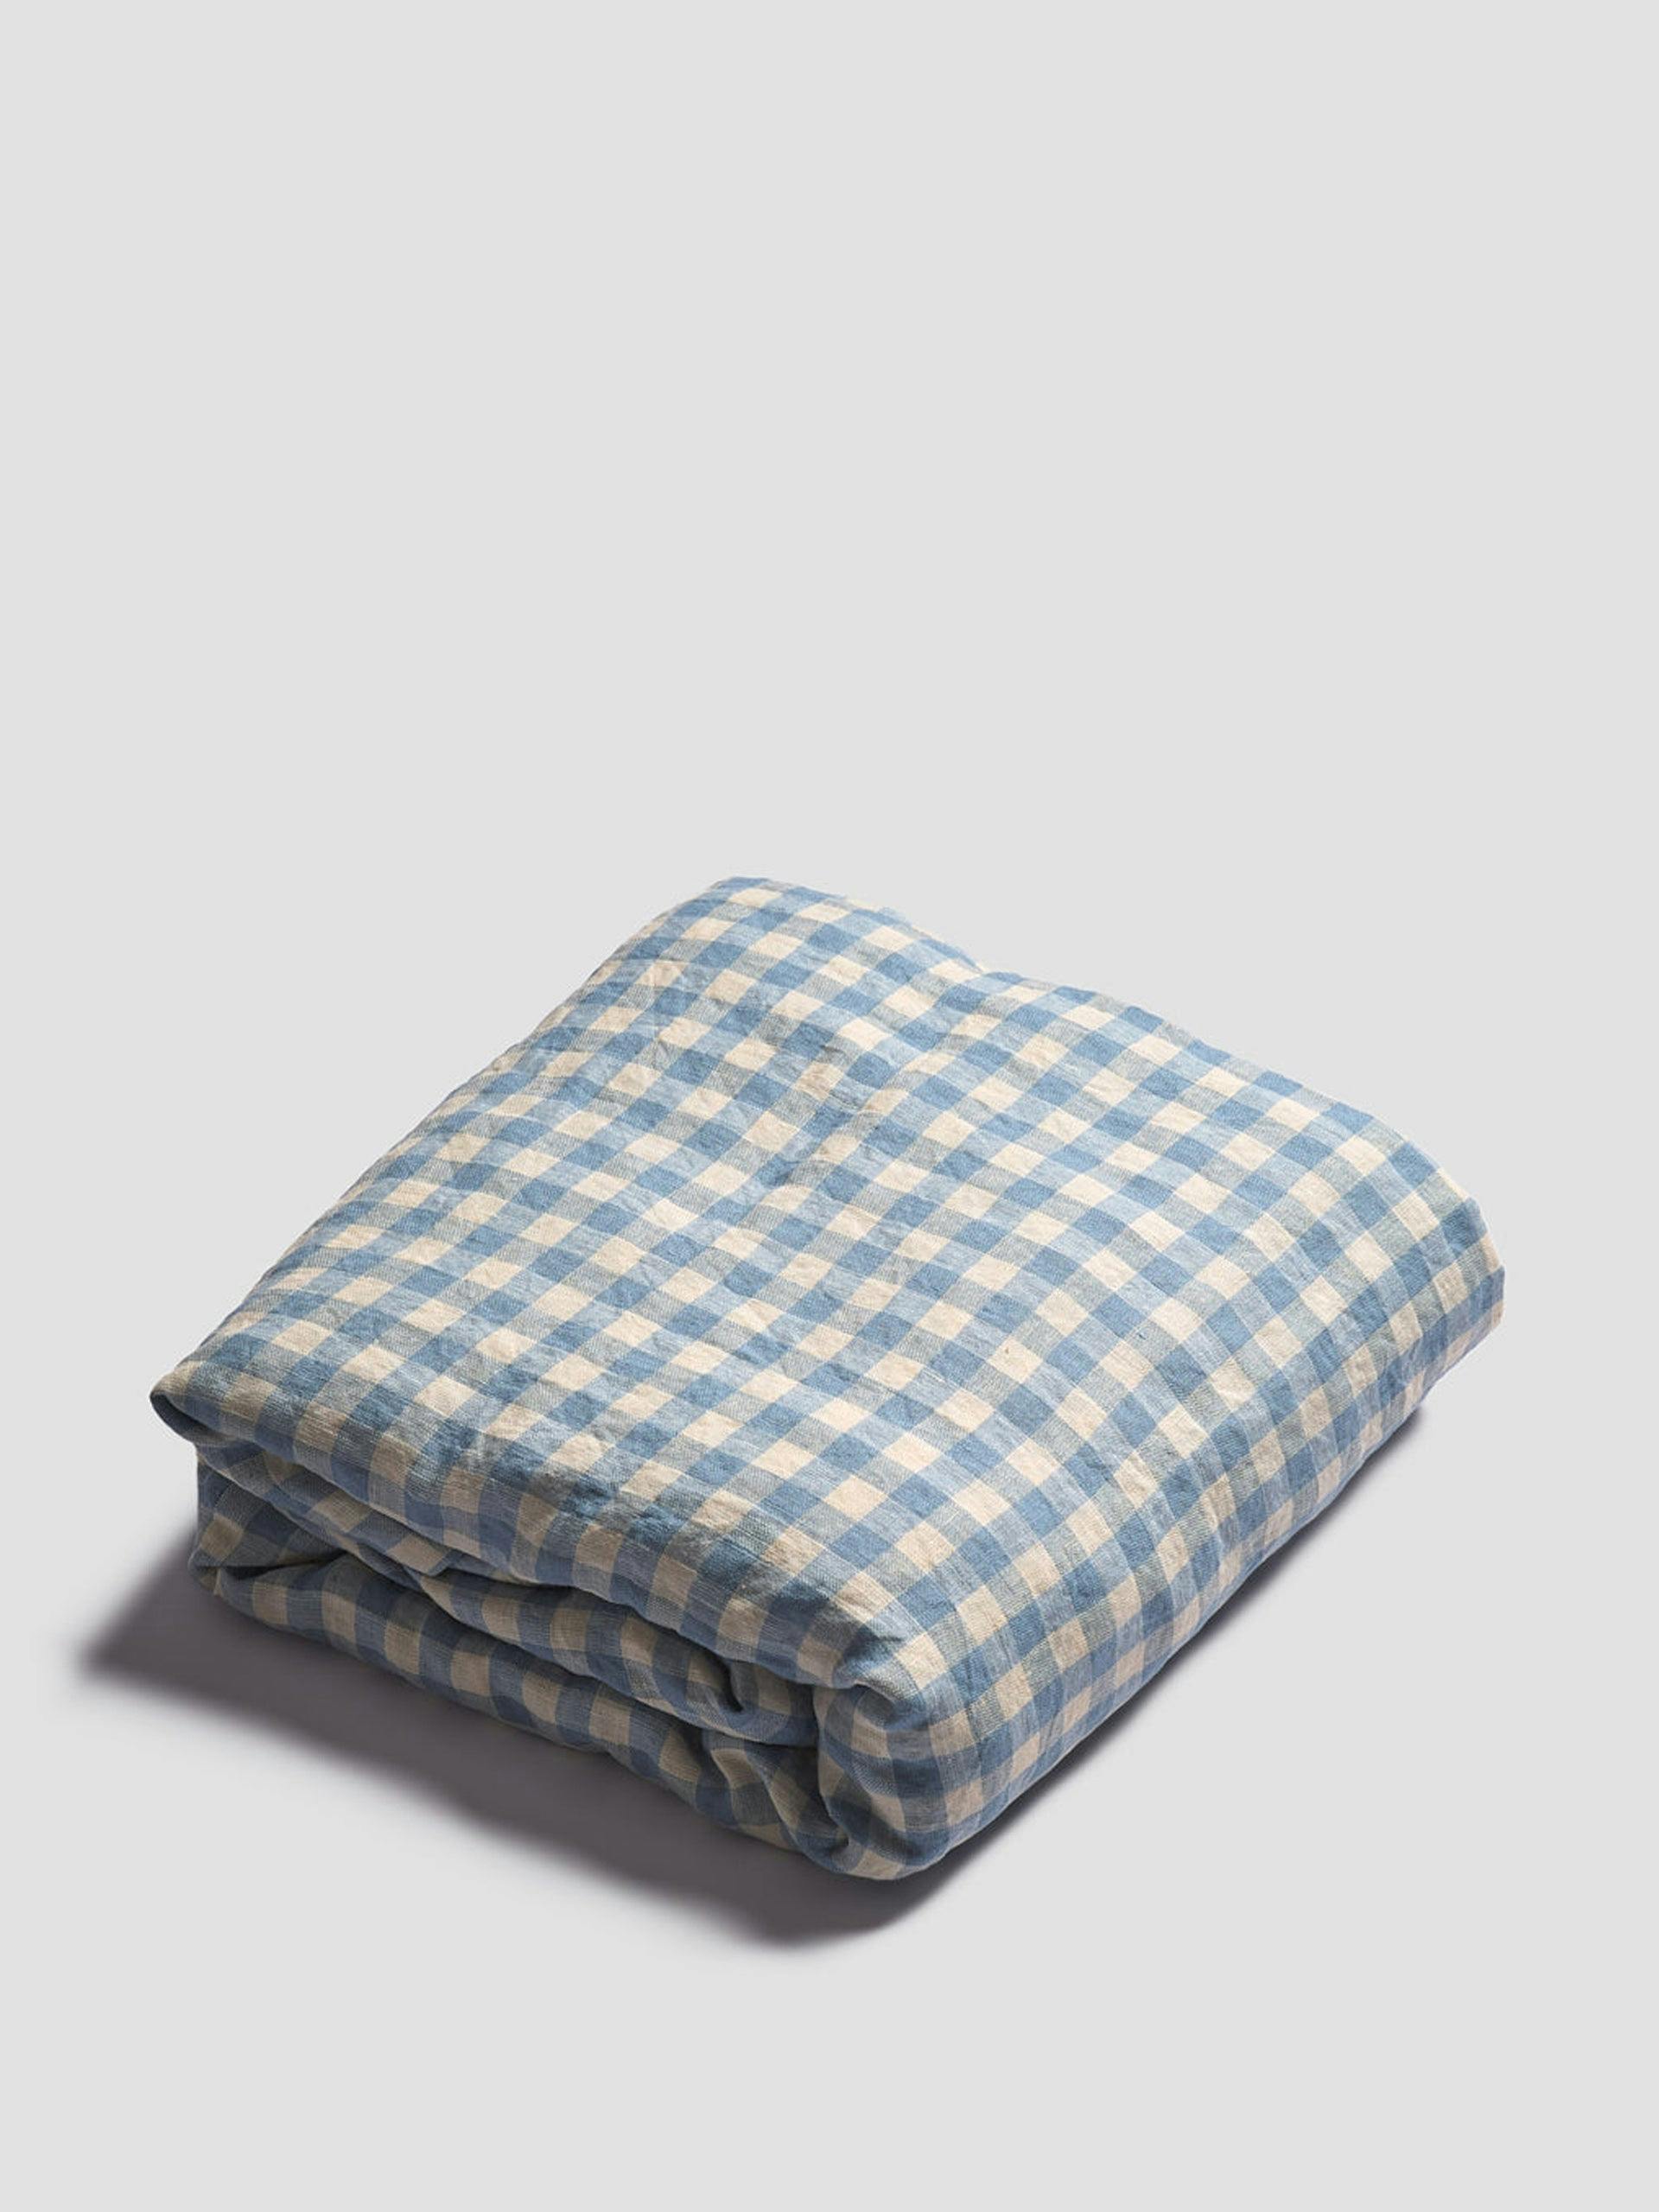 Warm blue gingham linen fitted sheet